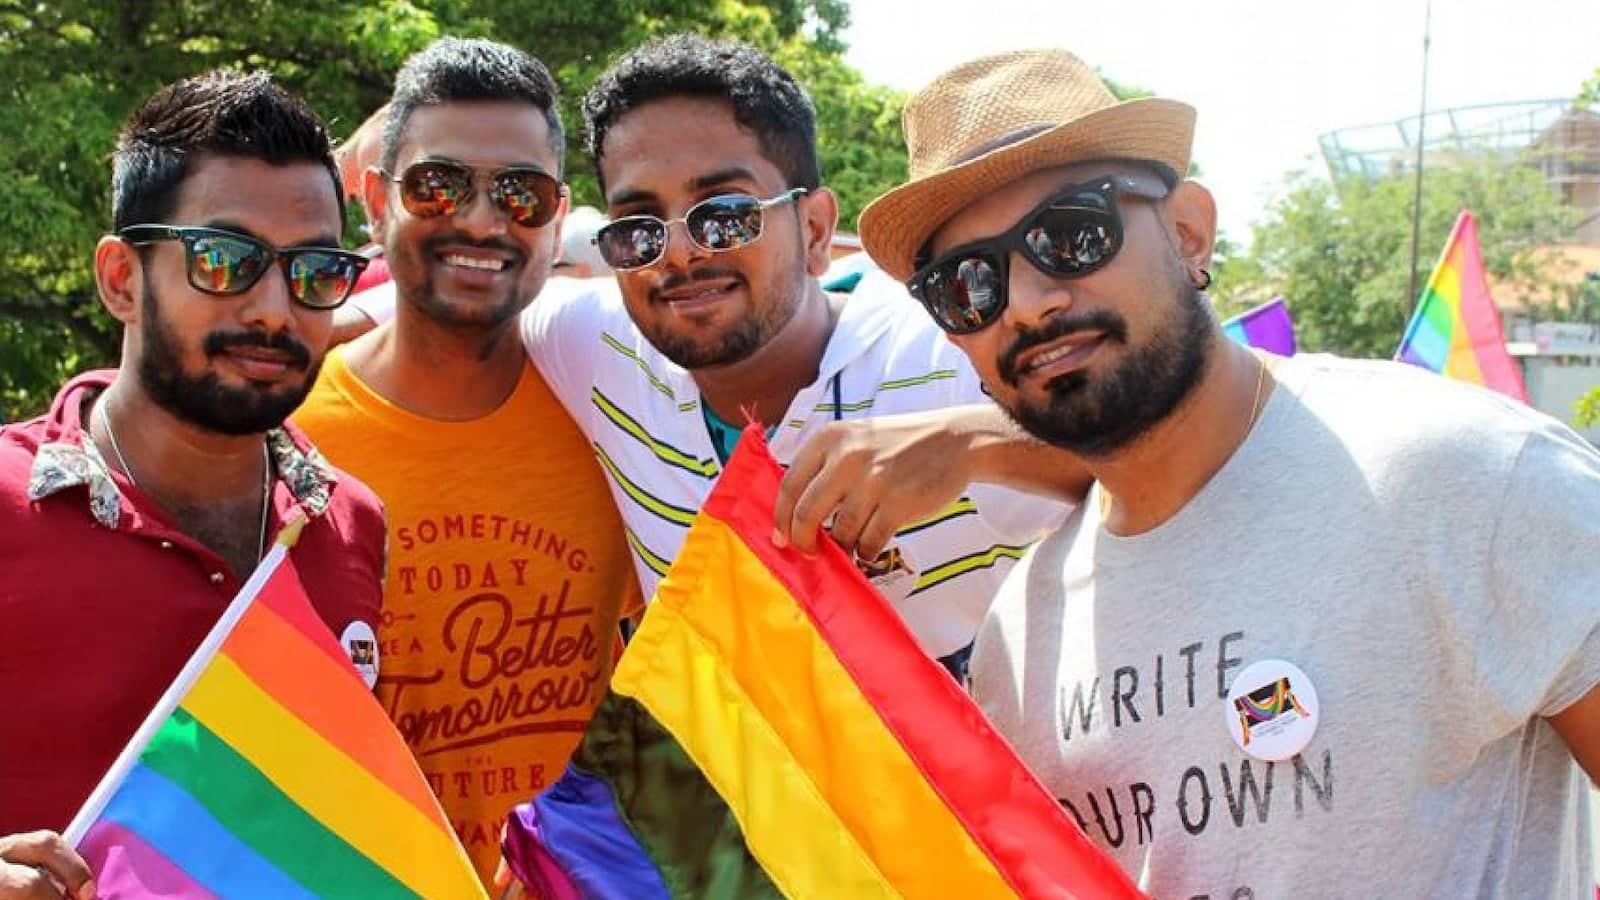 The boys of Colombo Pride LGBTQ event in Sri Lanka